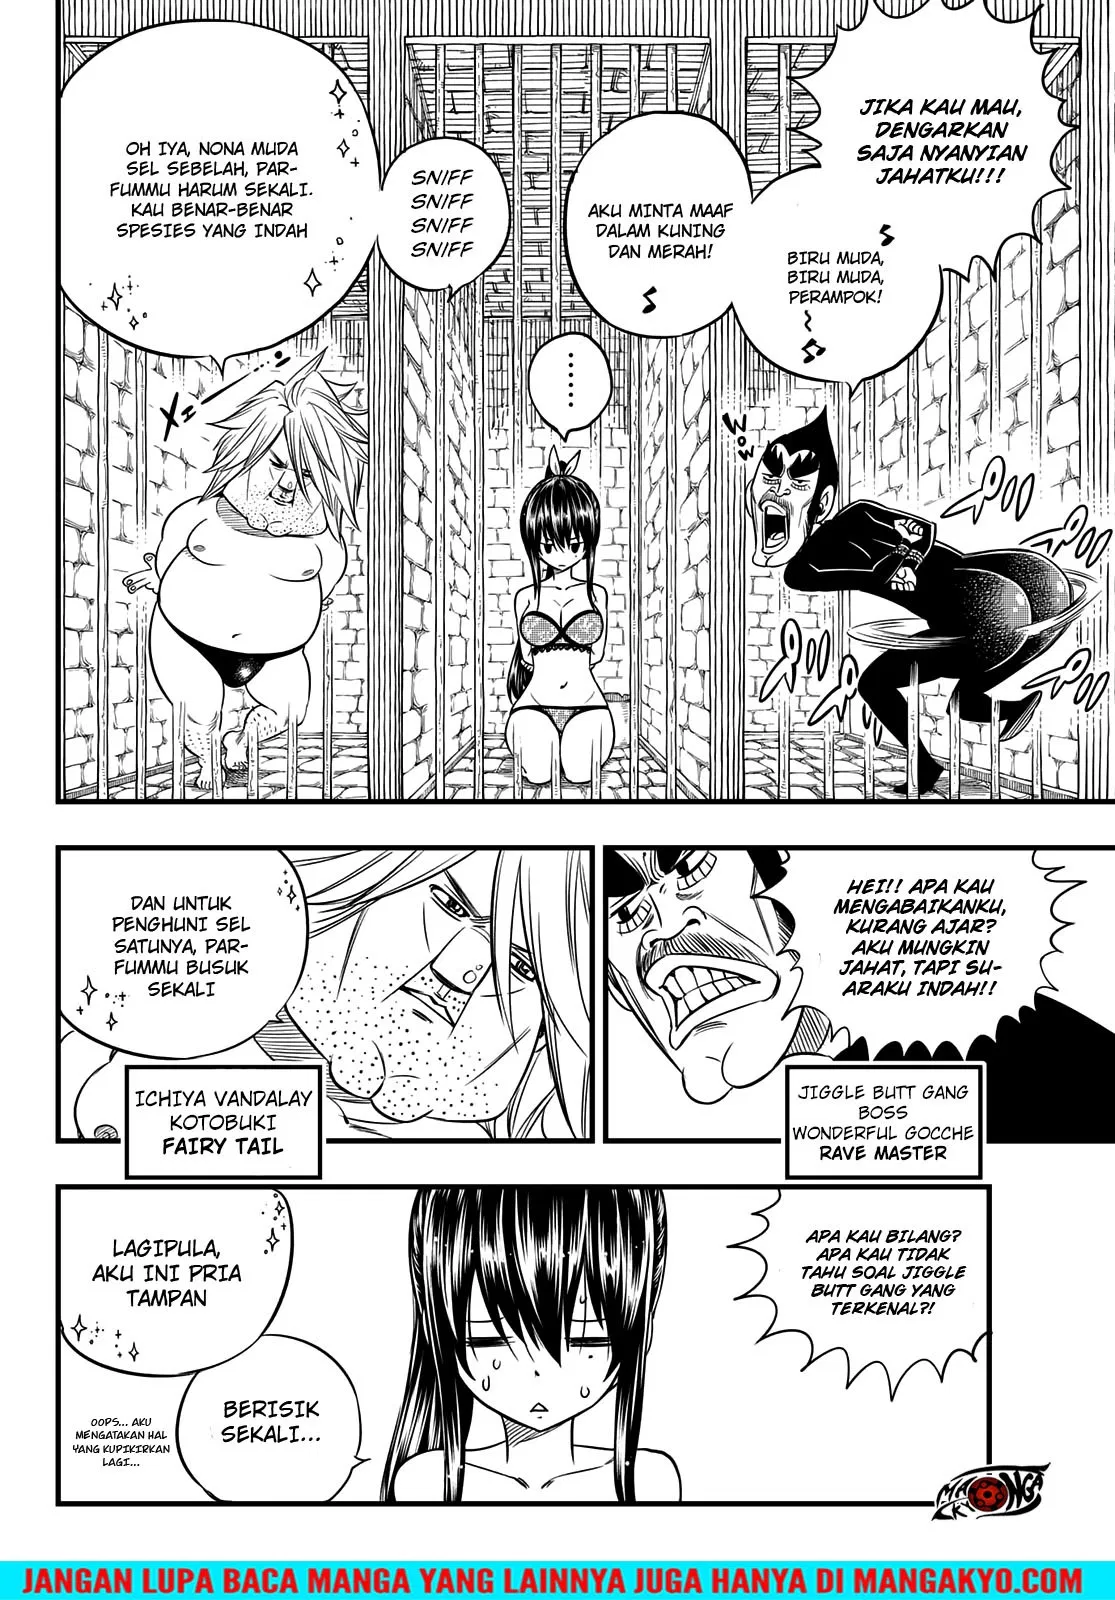 Mashima HERO’S Chapter 02